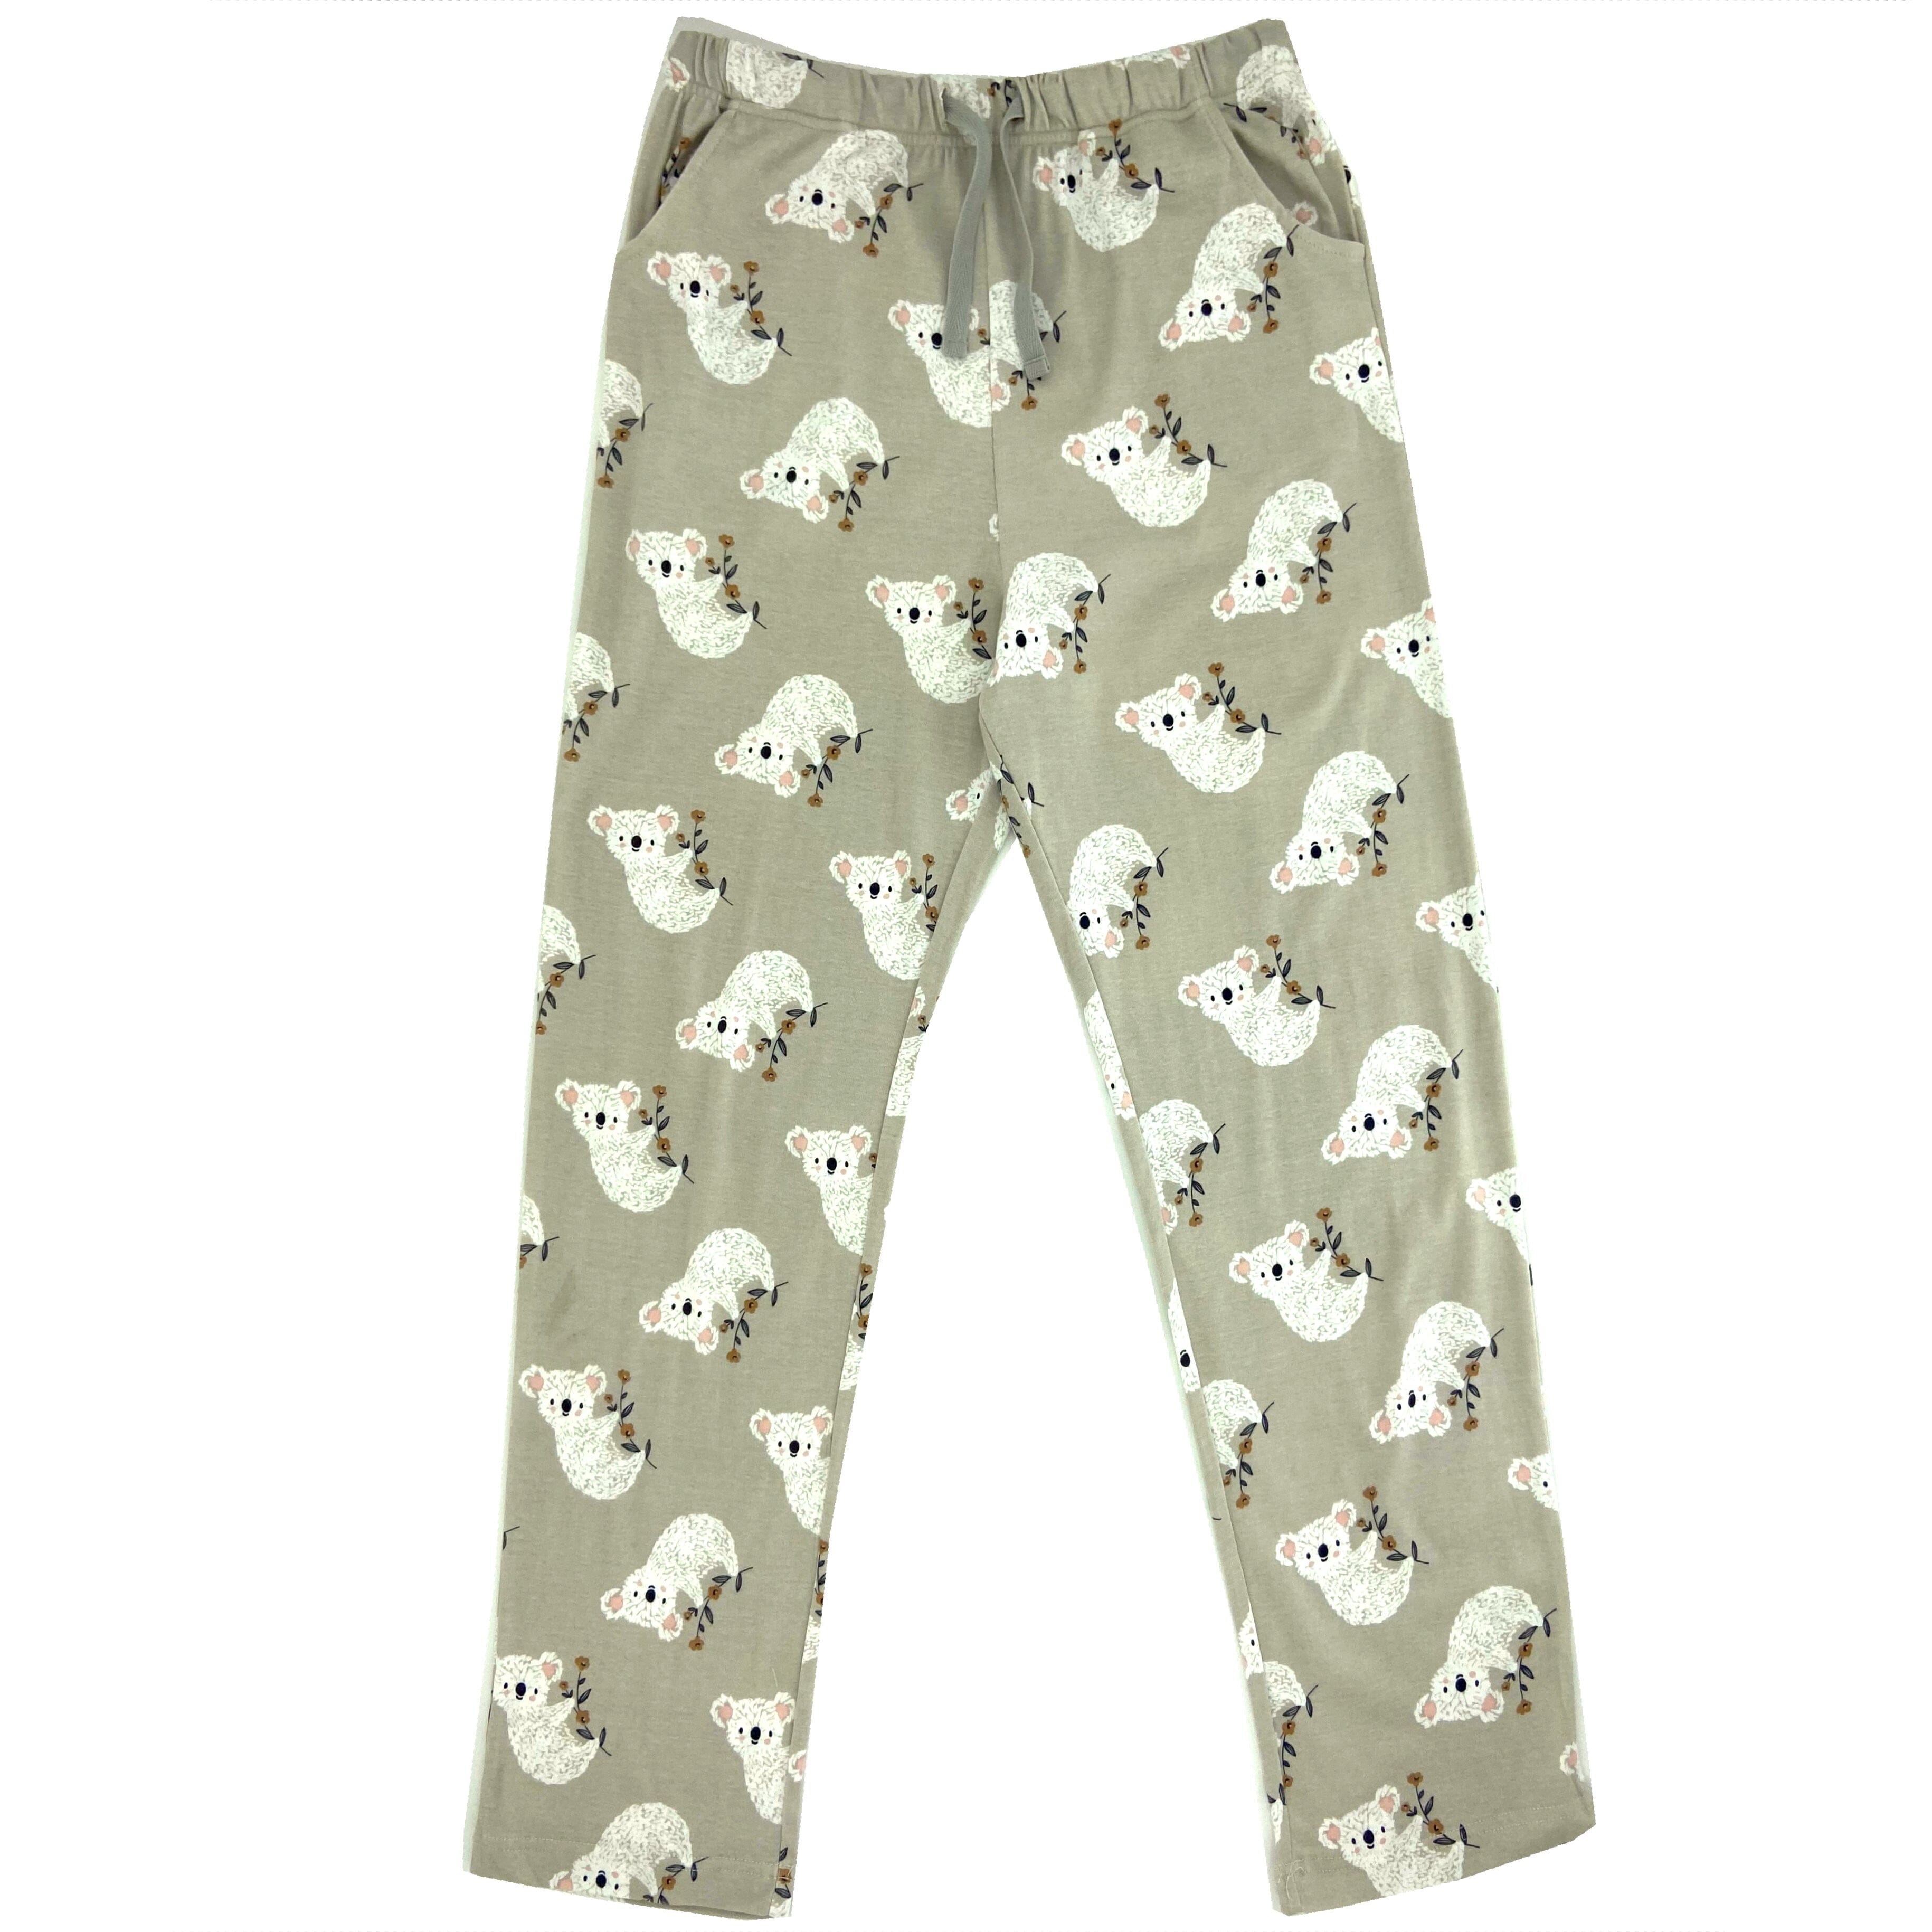 Women's Koala Print Long Pajama Pants. Shop Animal Print Lounge Pants